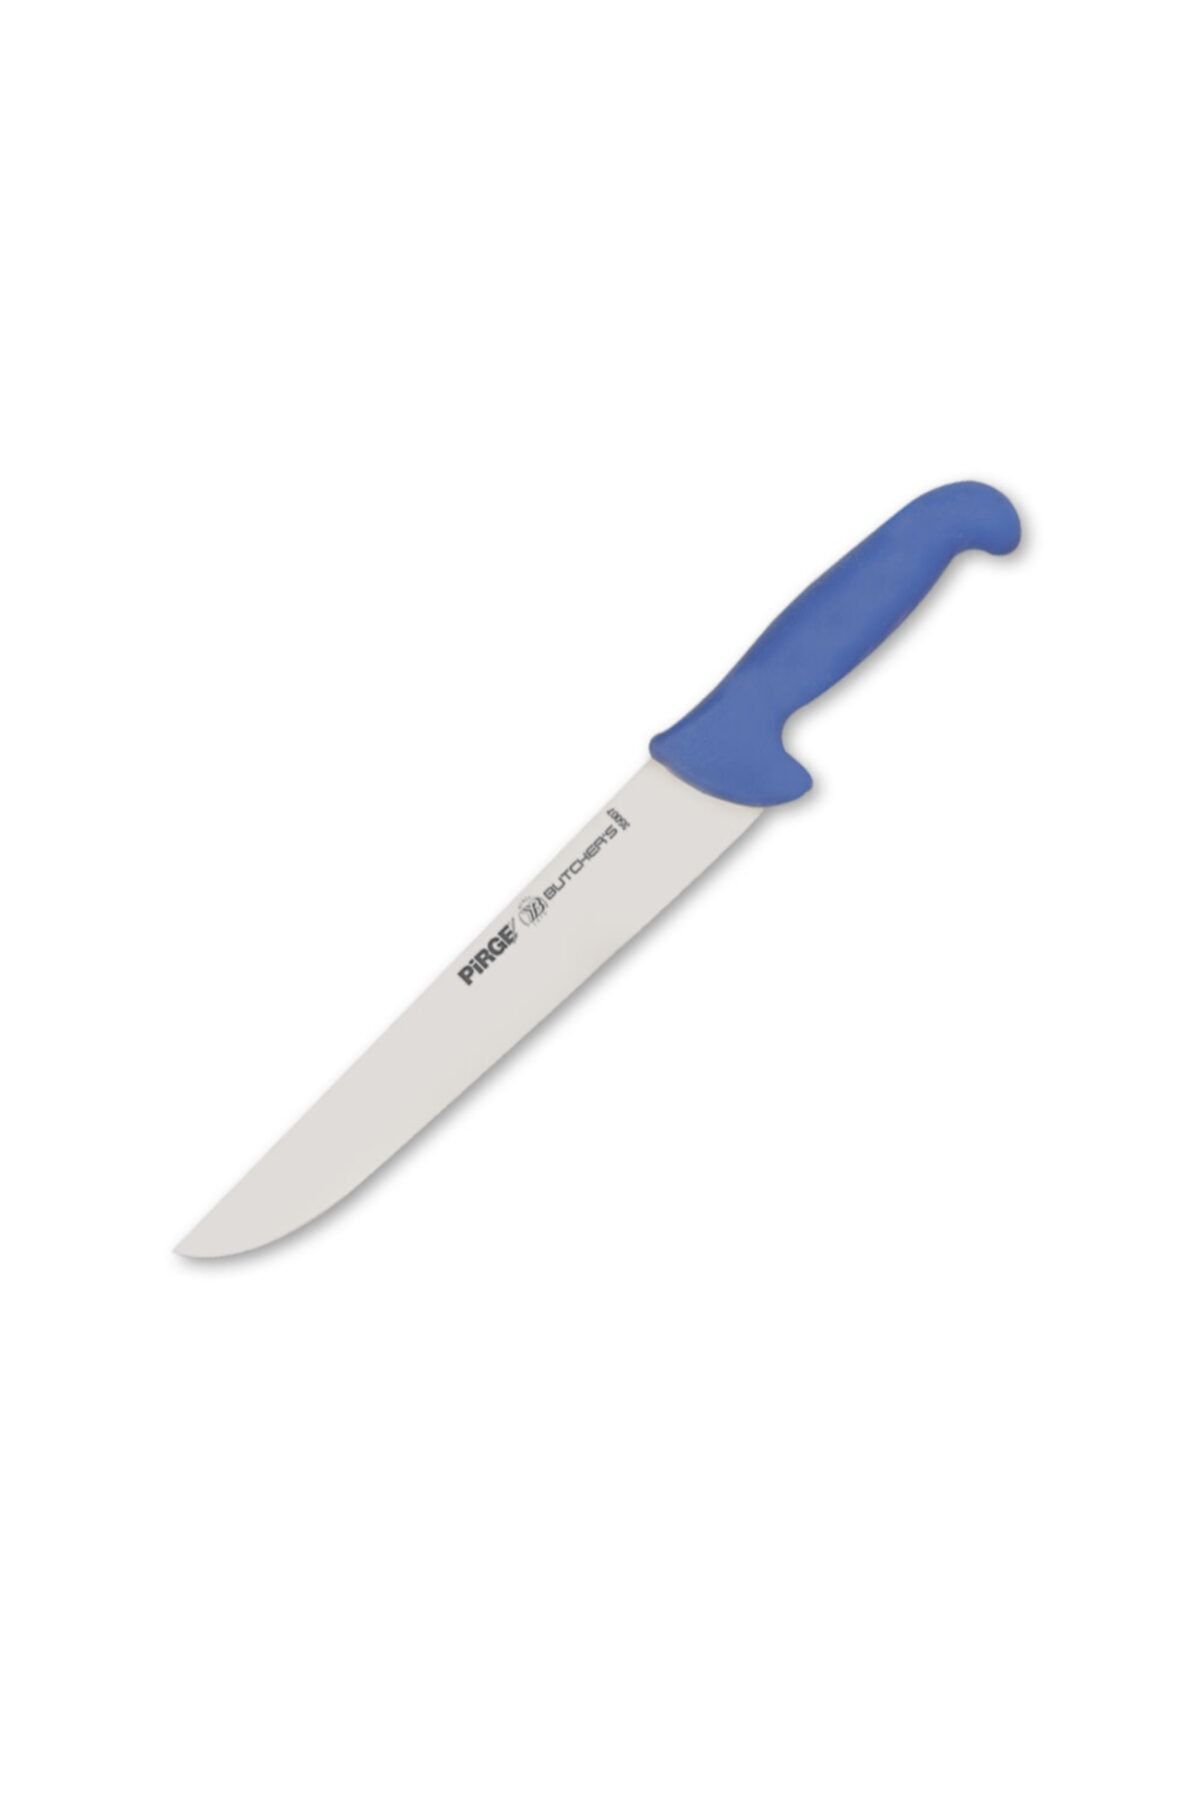 Pirge Butcher's Dilimleme Bıçağı 25 Cm